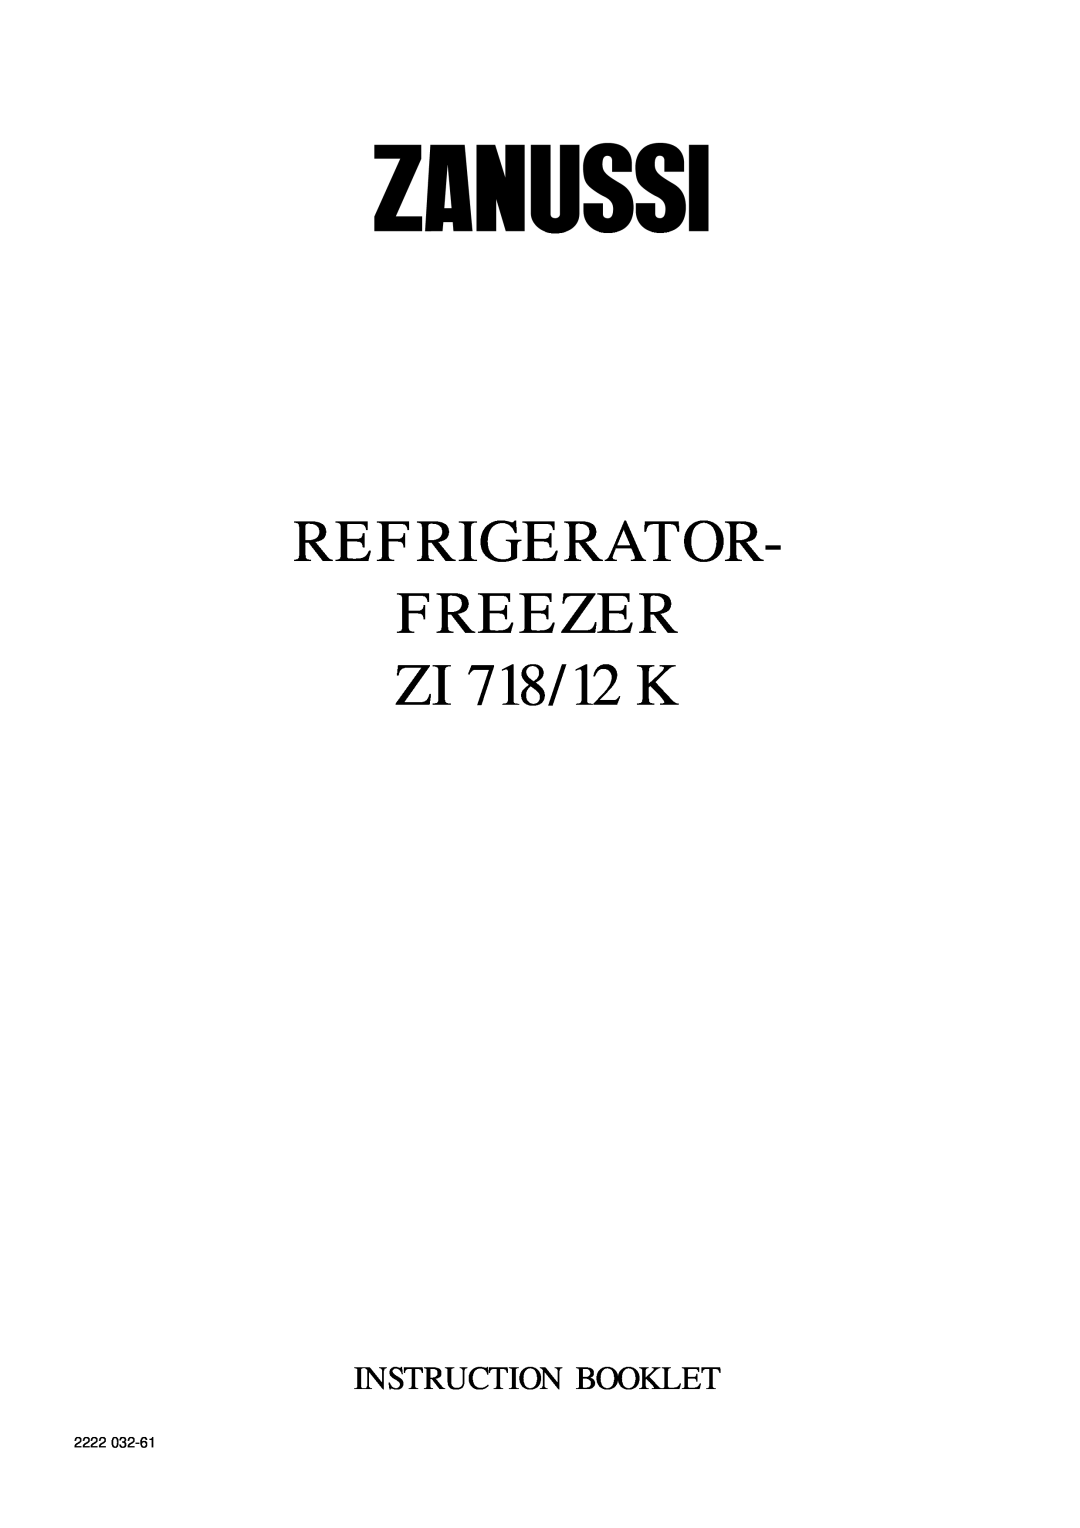 Zanussi manual REFRIGERATOR FREEZER ZI 718/12 K, Instruction Booklet, 2222 